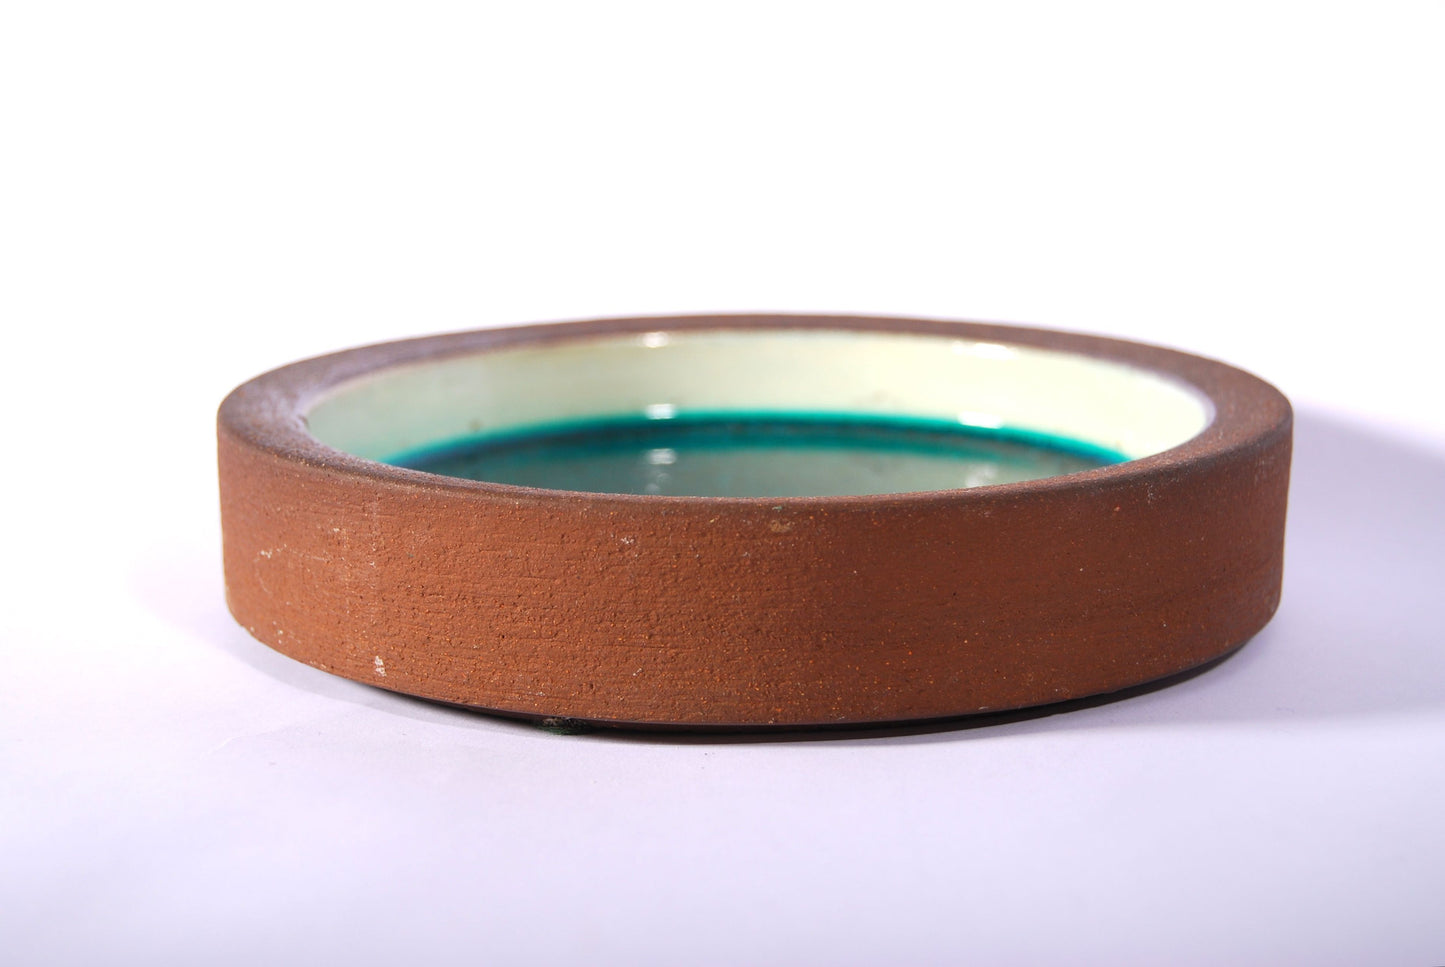 Stoneware ashtray by Richard Manz